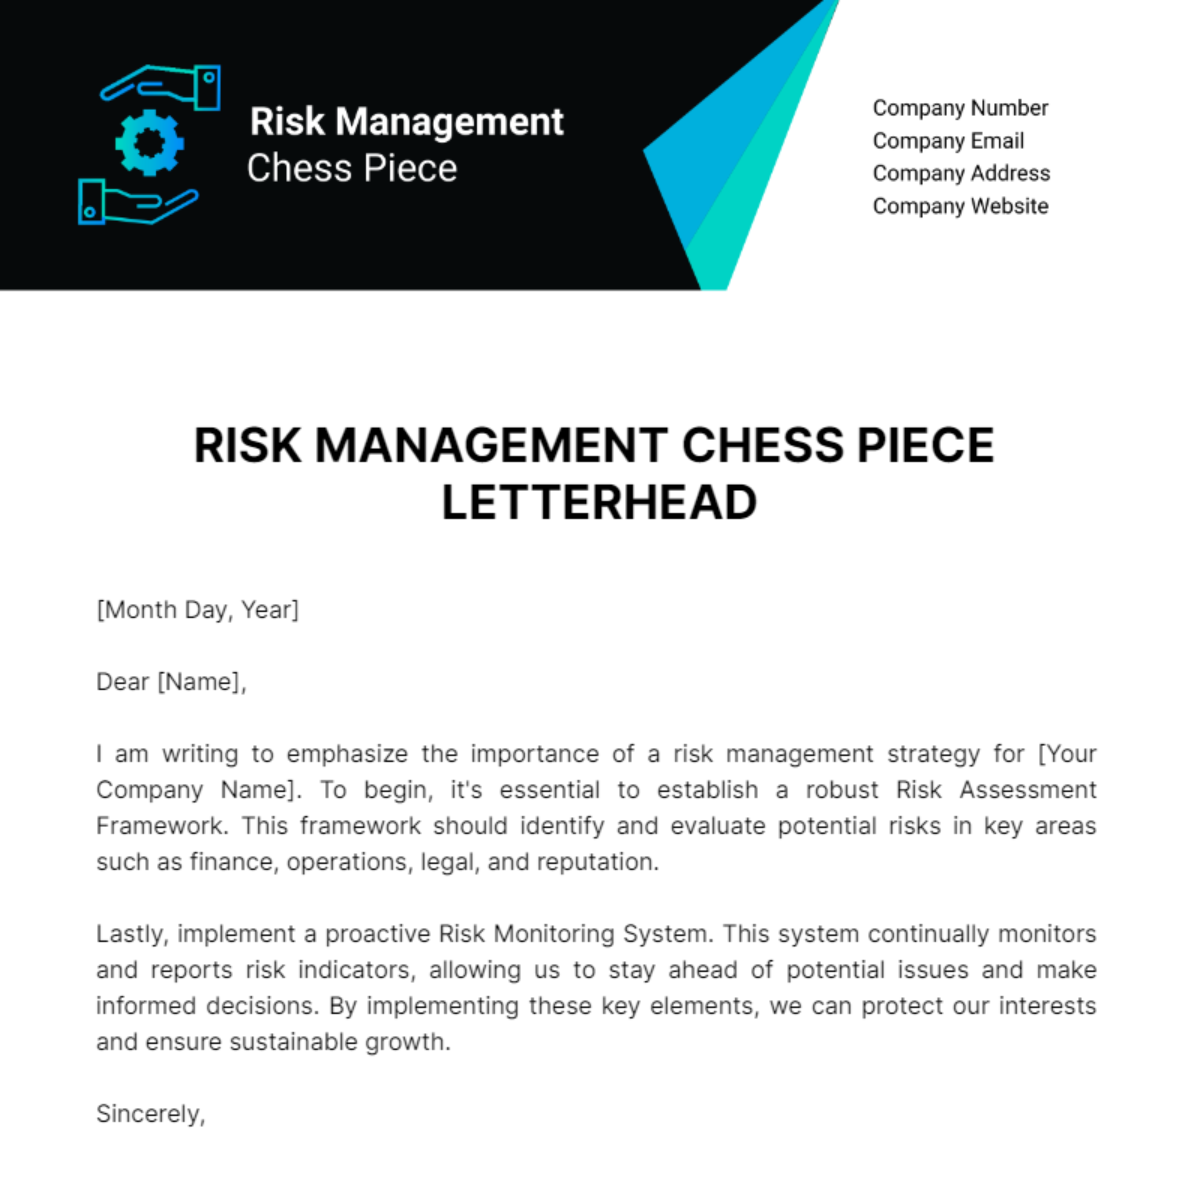 Free Risk Management Chess Piece Letterhead Template